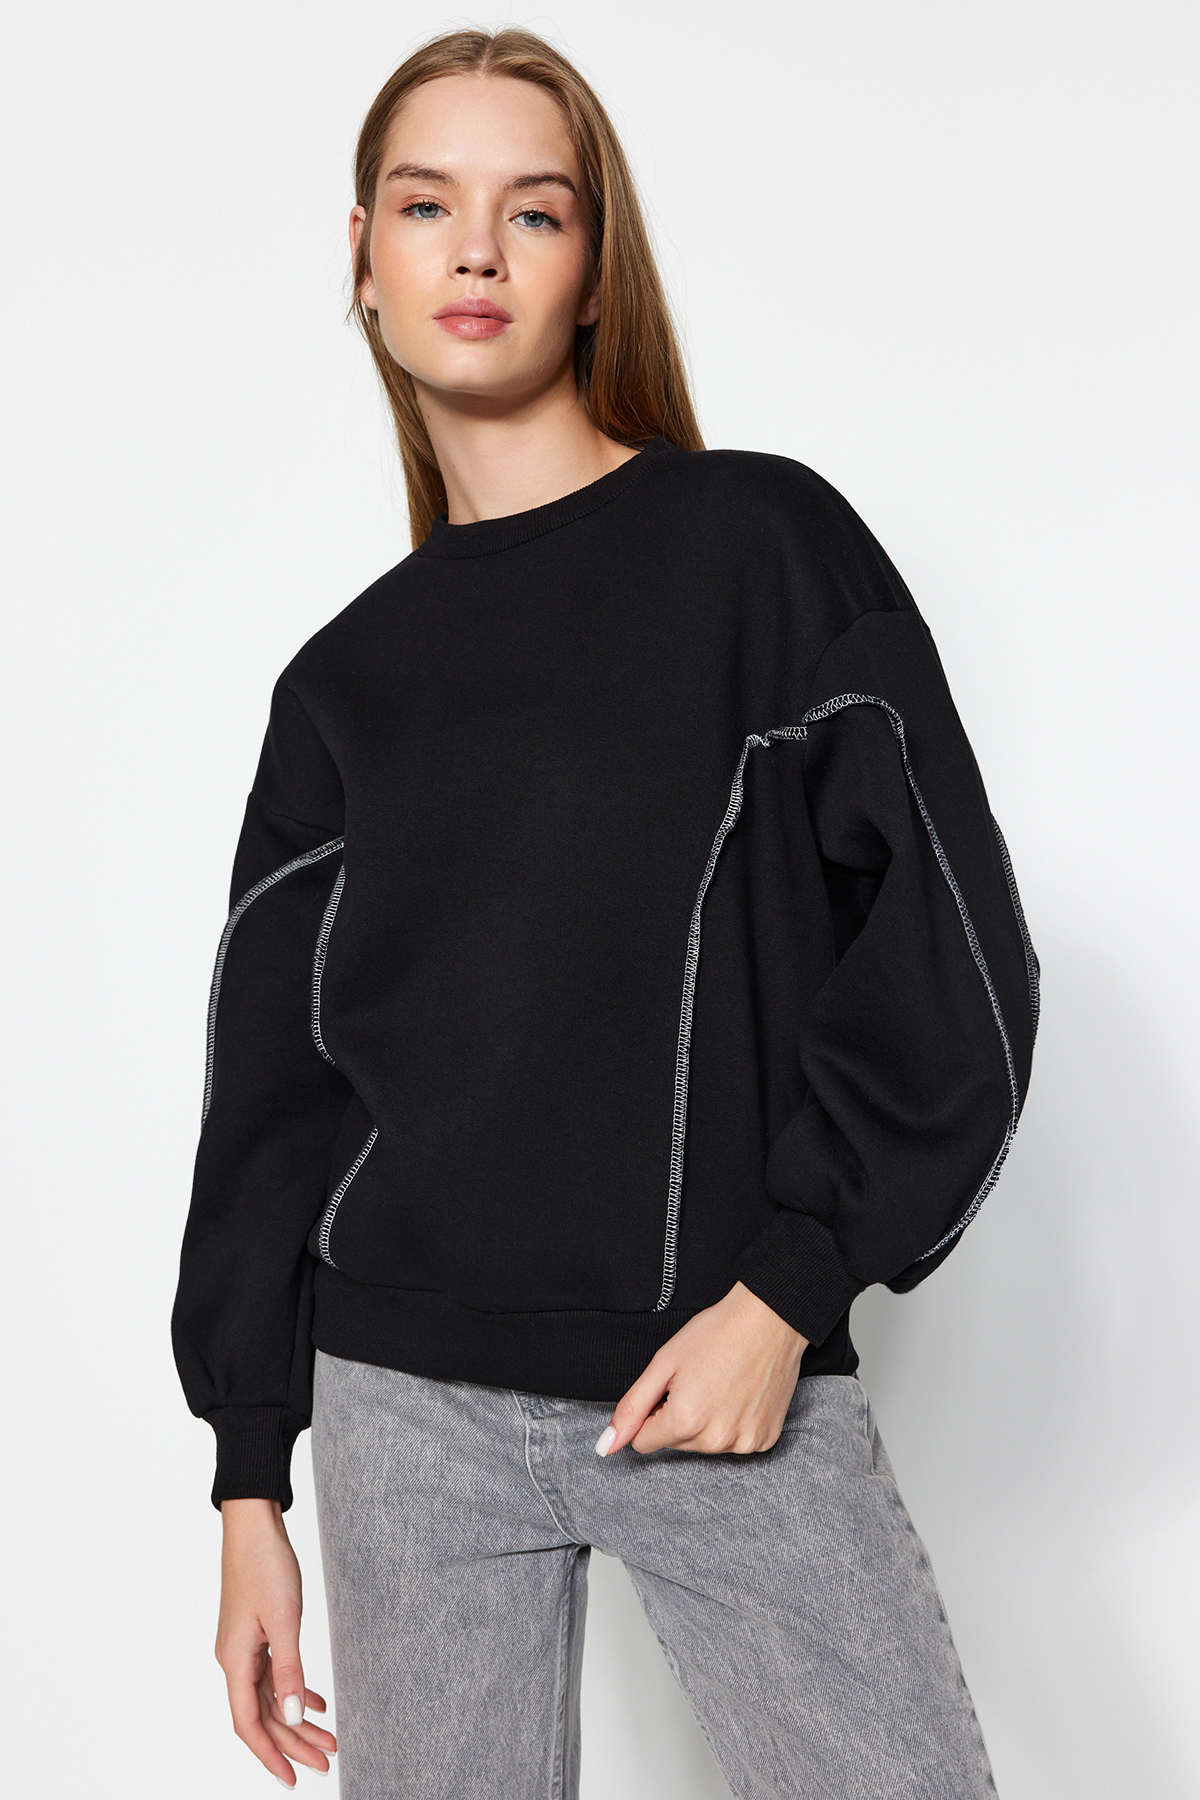 Trendyol Black Stitching Detailed Crew Neck Regular Fit Thick Inside Fleece Knitted Sweatshirt